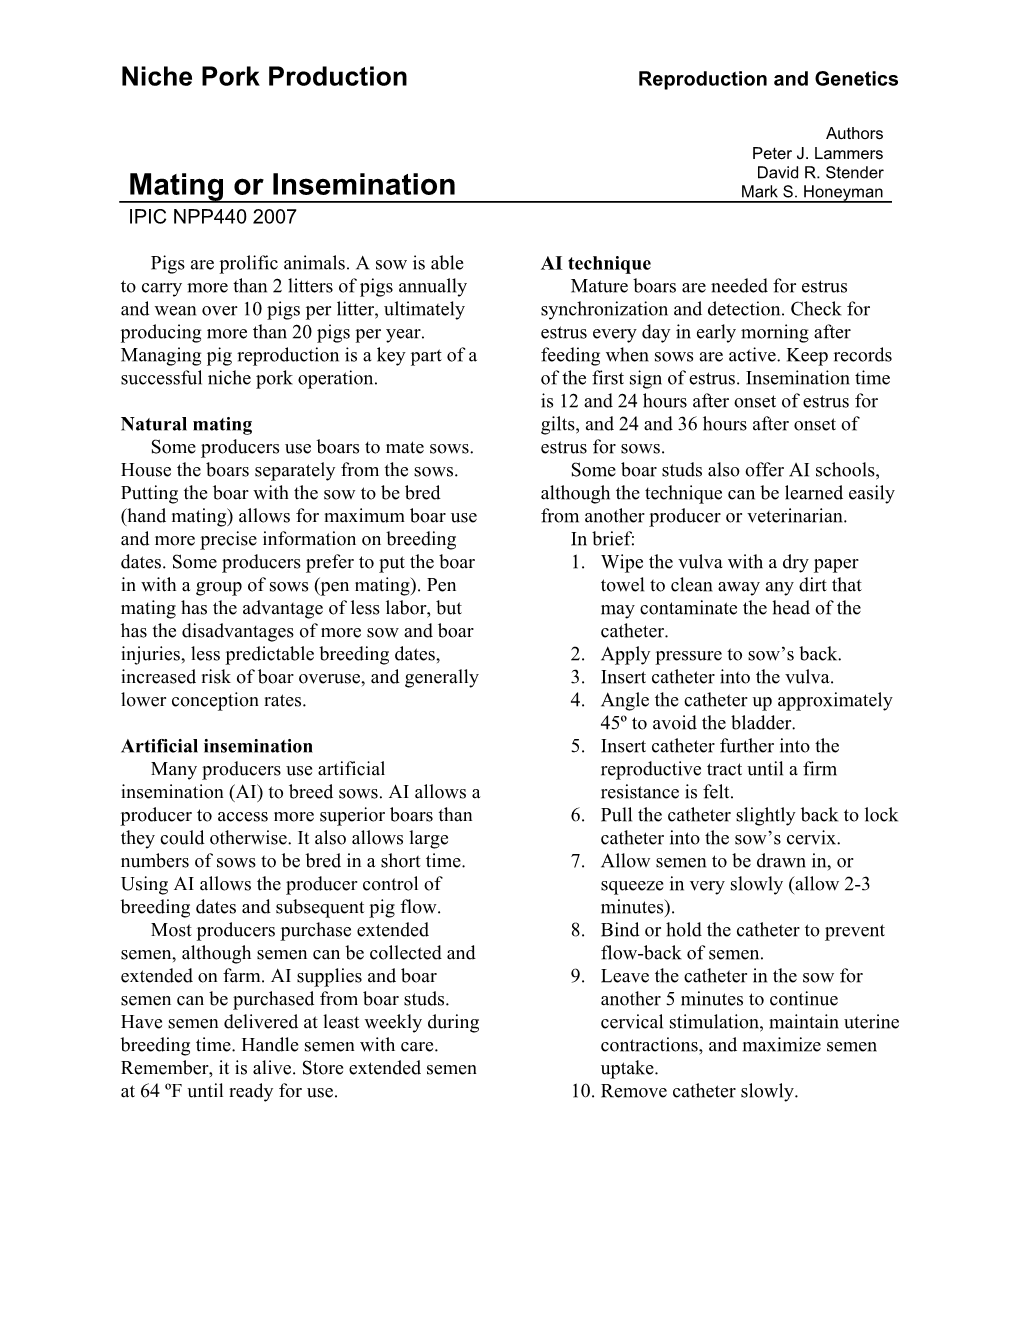 Mating Or Insemination Mark S